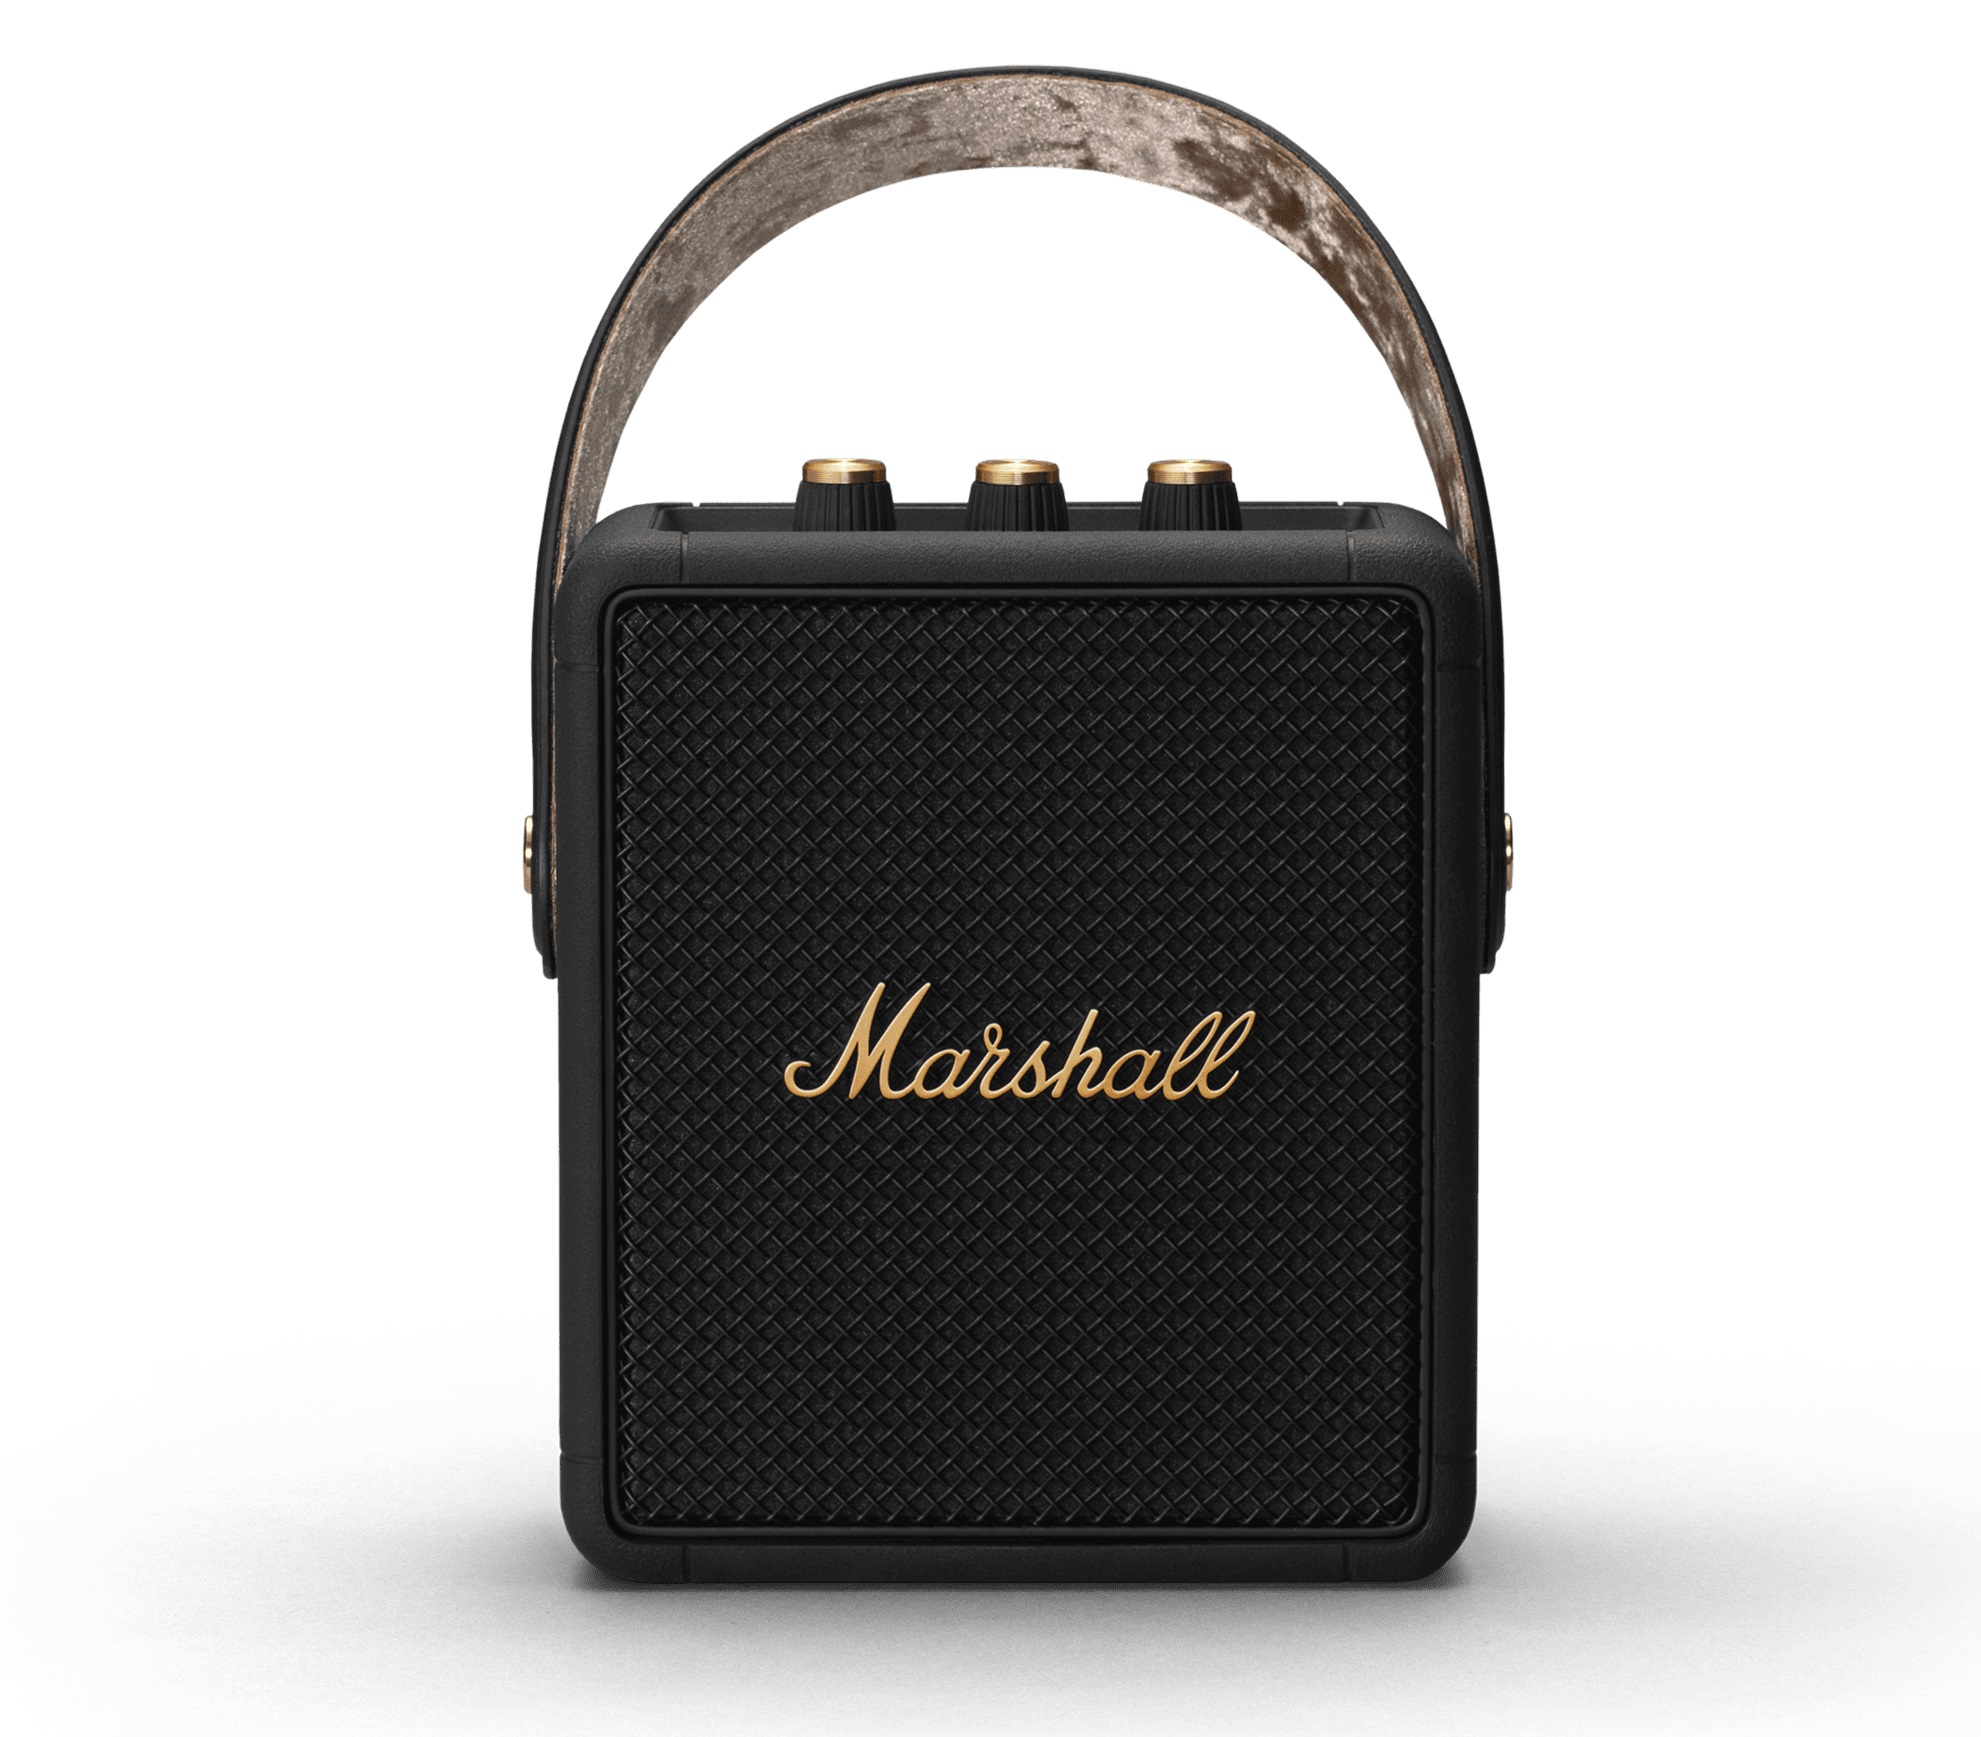 Портативная акустика MARSHALL Stockwell II black brass marshall tandem поводок для выгула двух хорьков красный